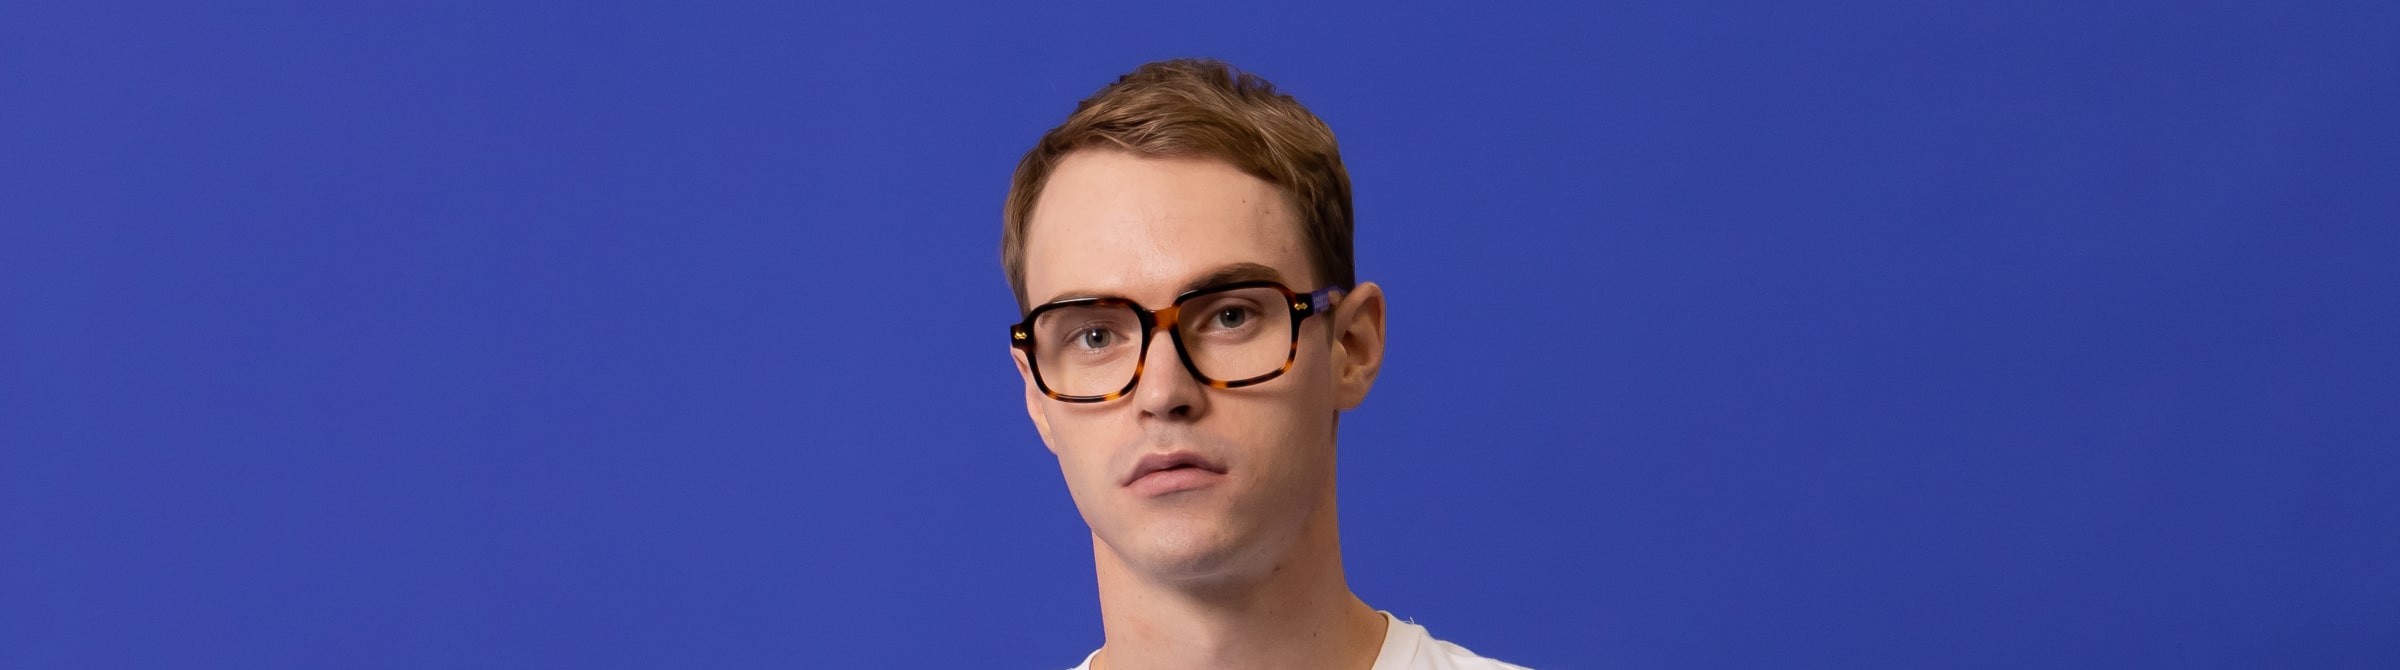 man wears stylish tortoiseshell glasses